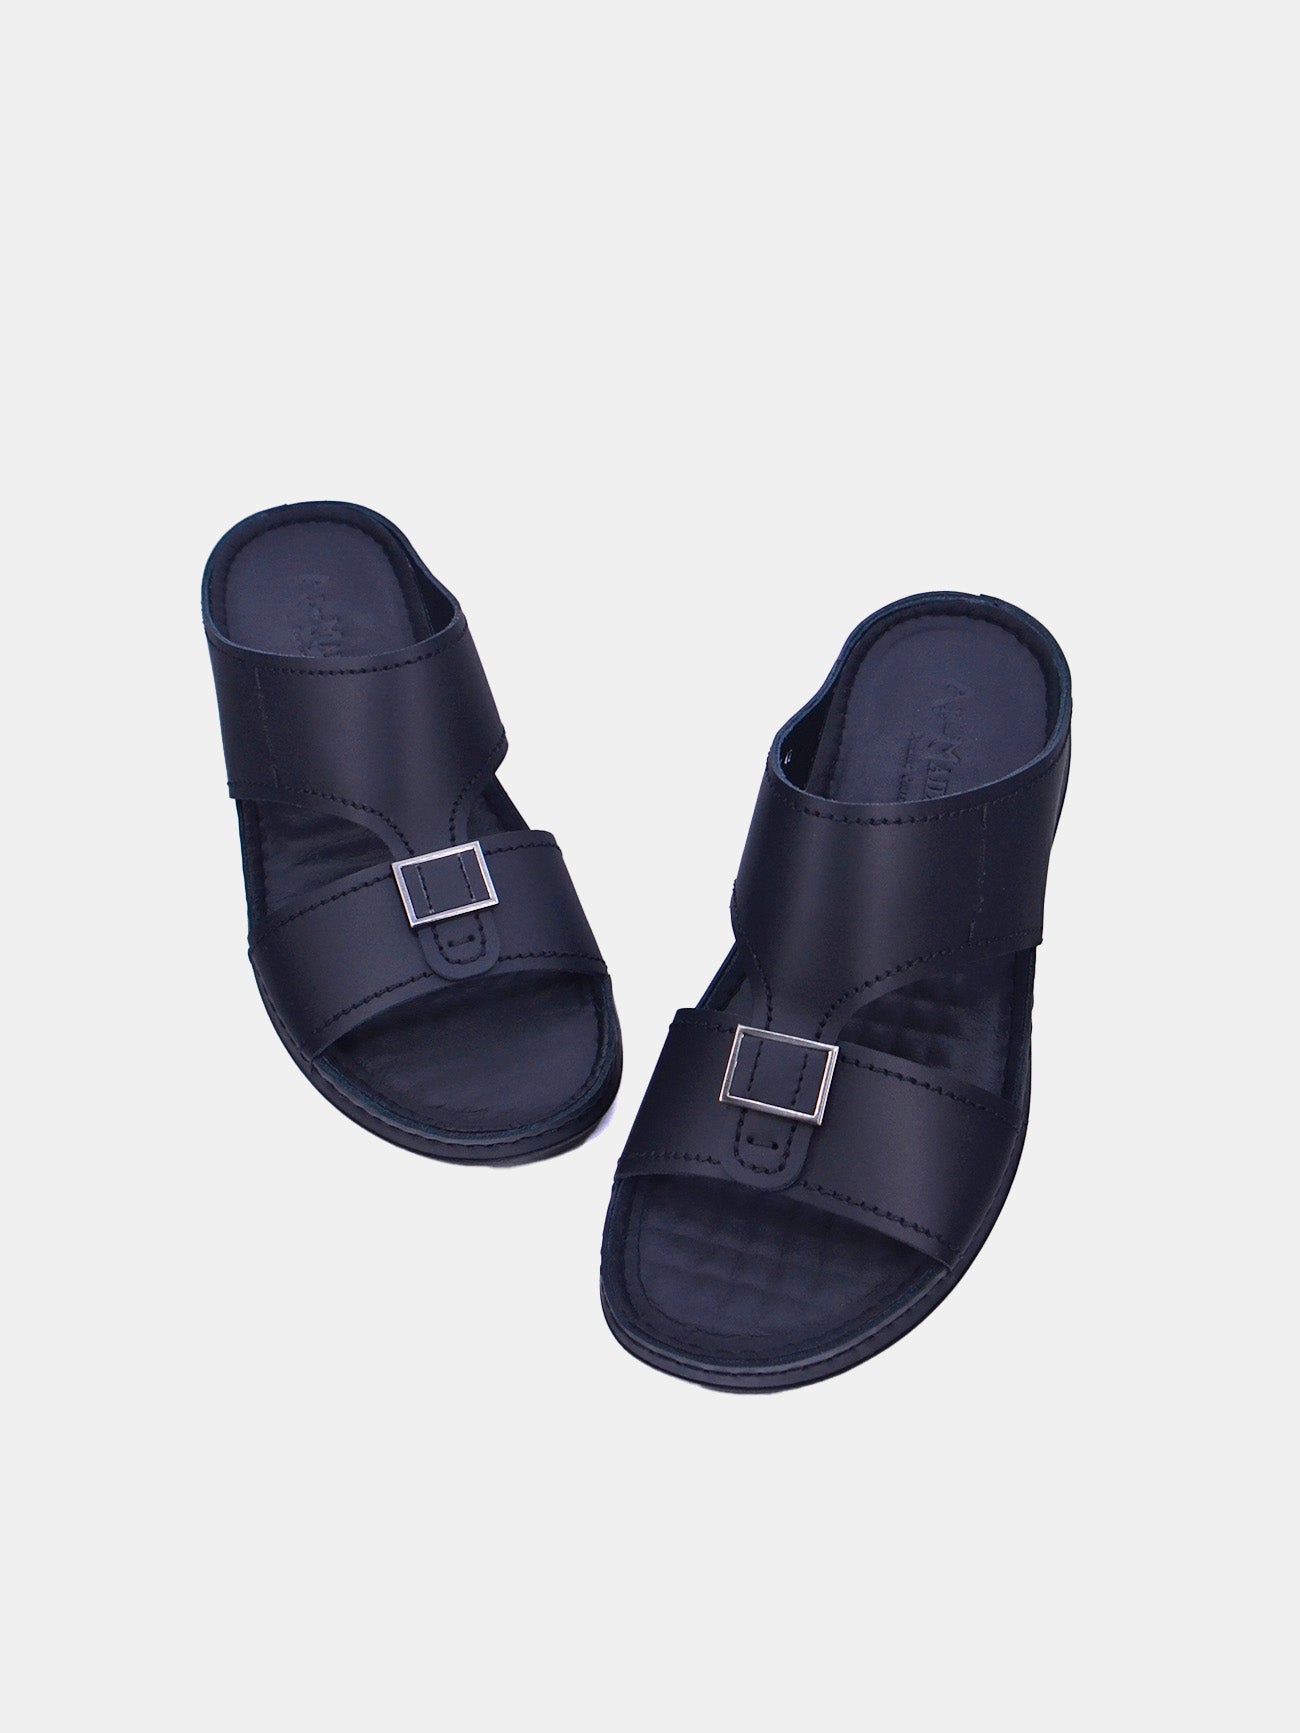 Al Maidan K-793 Men's Arabic Sandals